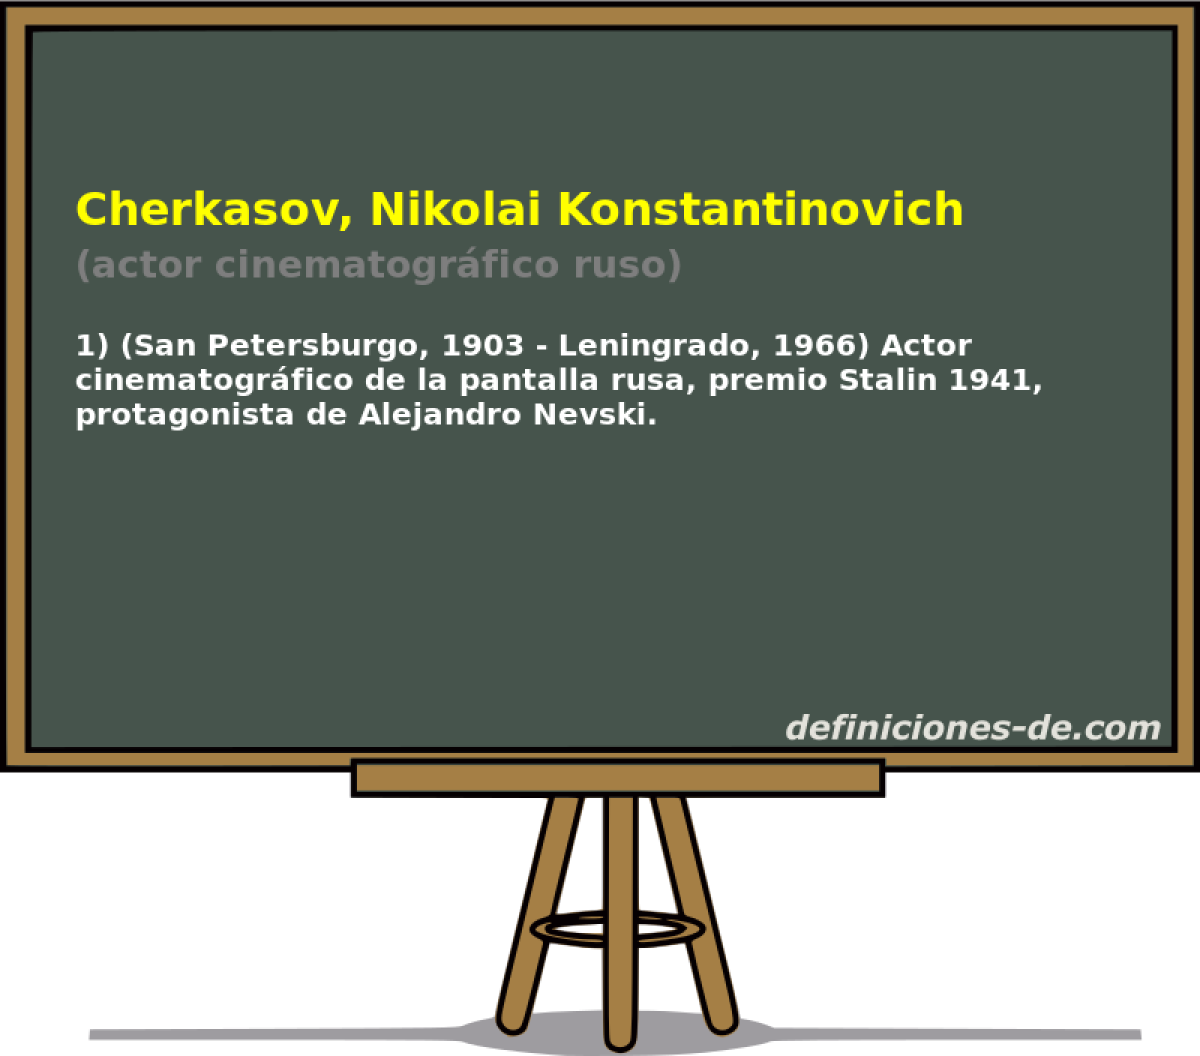 Cherkasov, Nikolai Konstantinovich (actor cinematogrfico ruso)